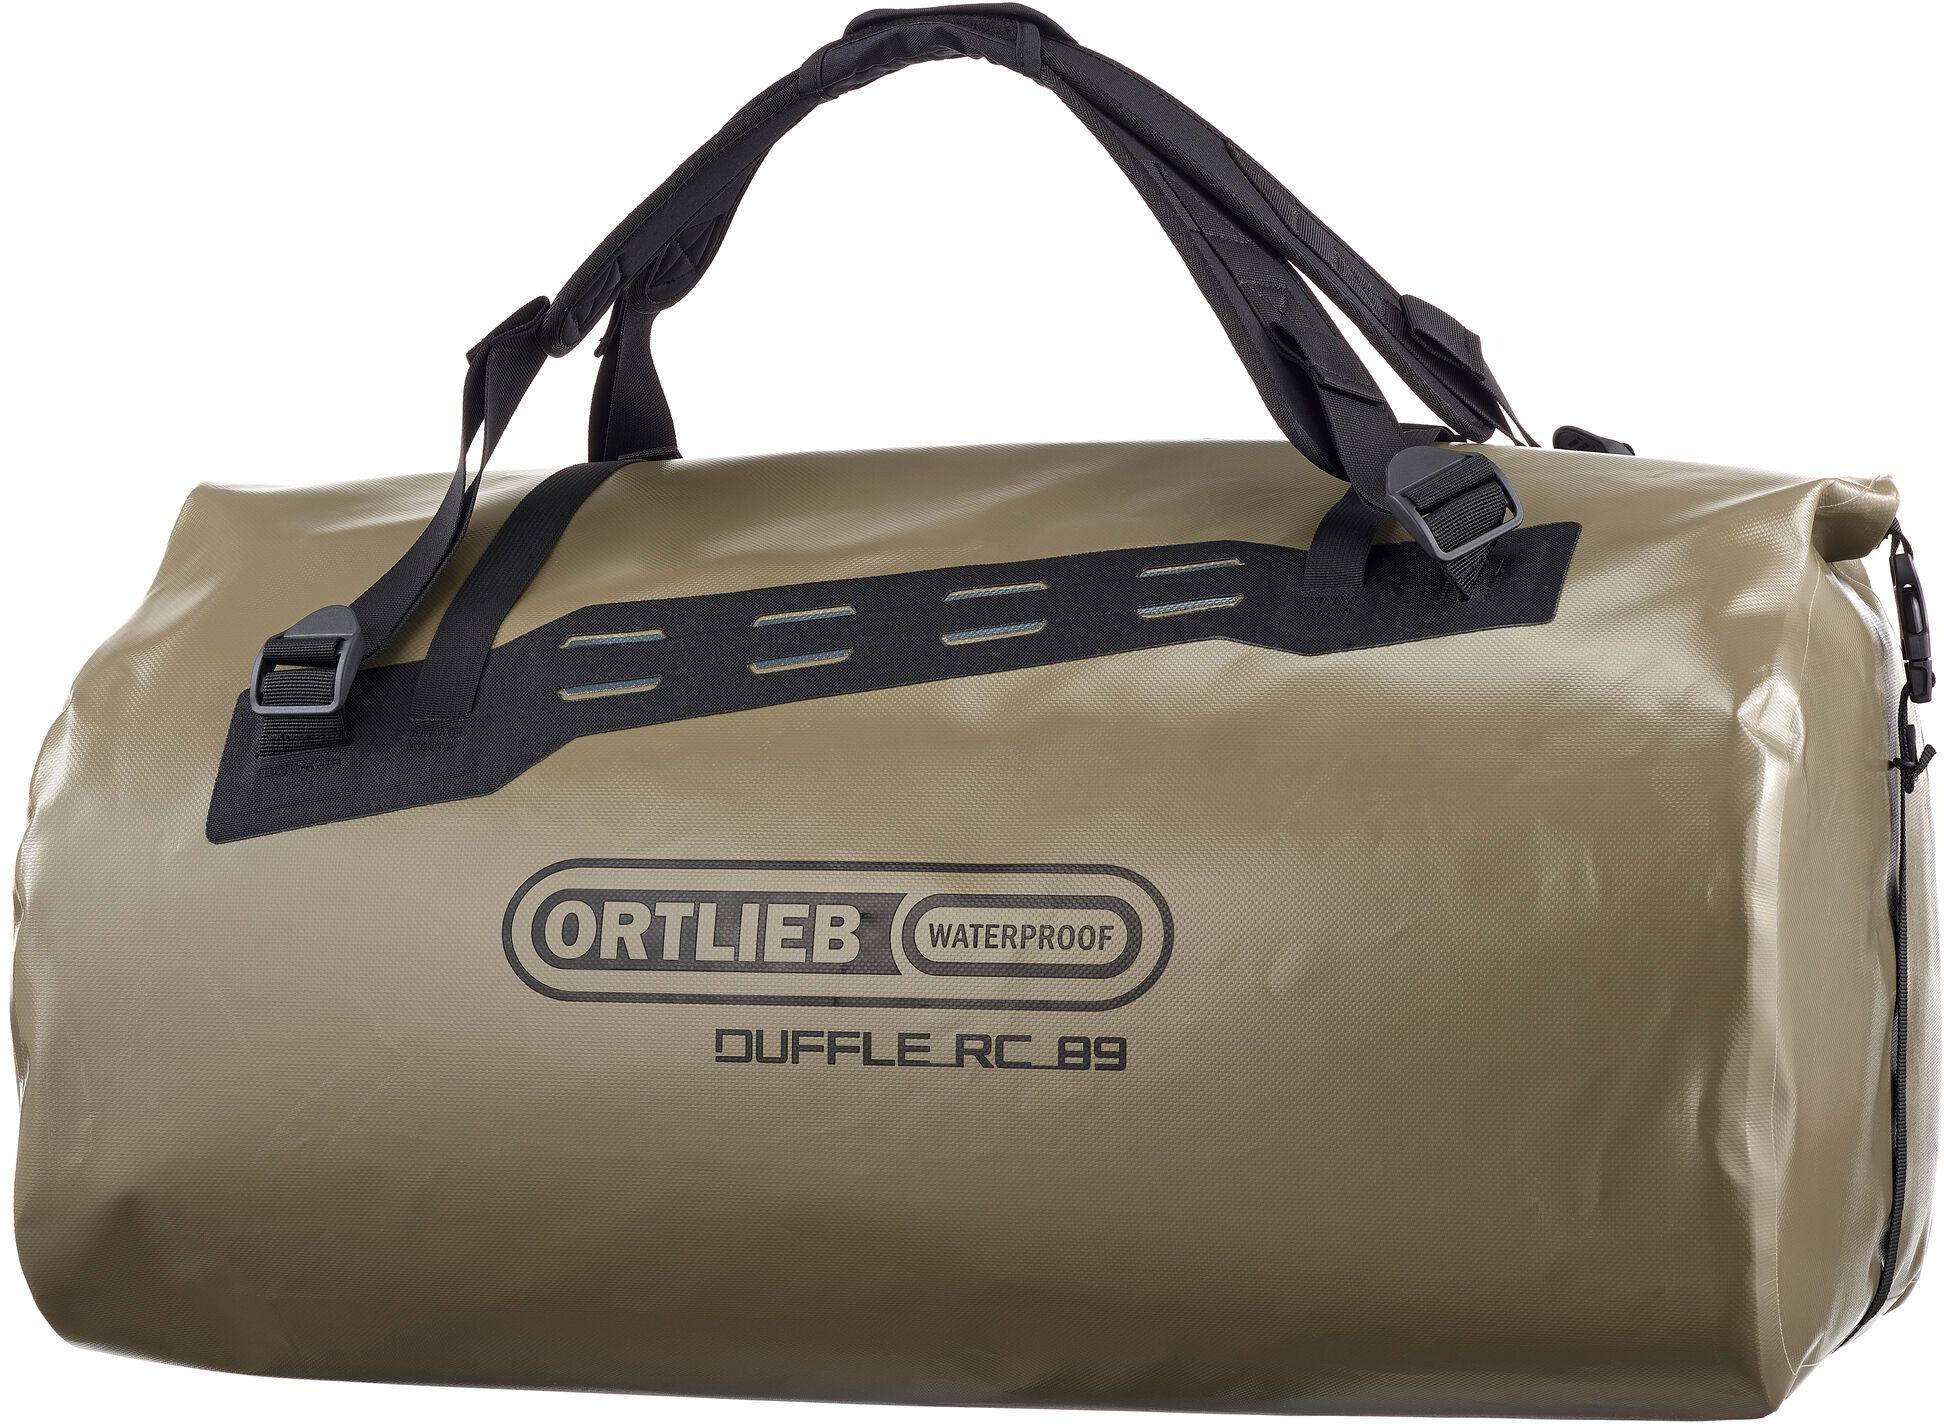 Ortlieb Duffle RC 89